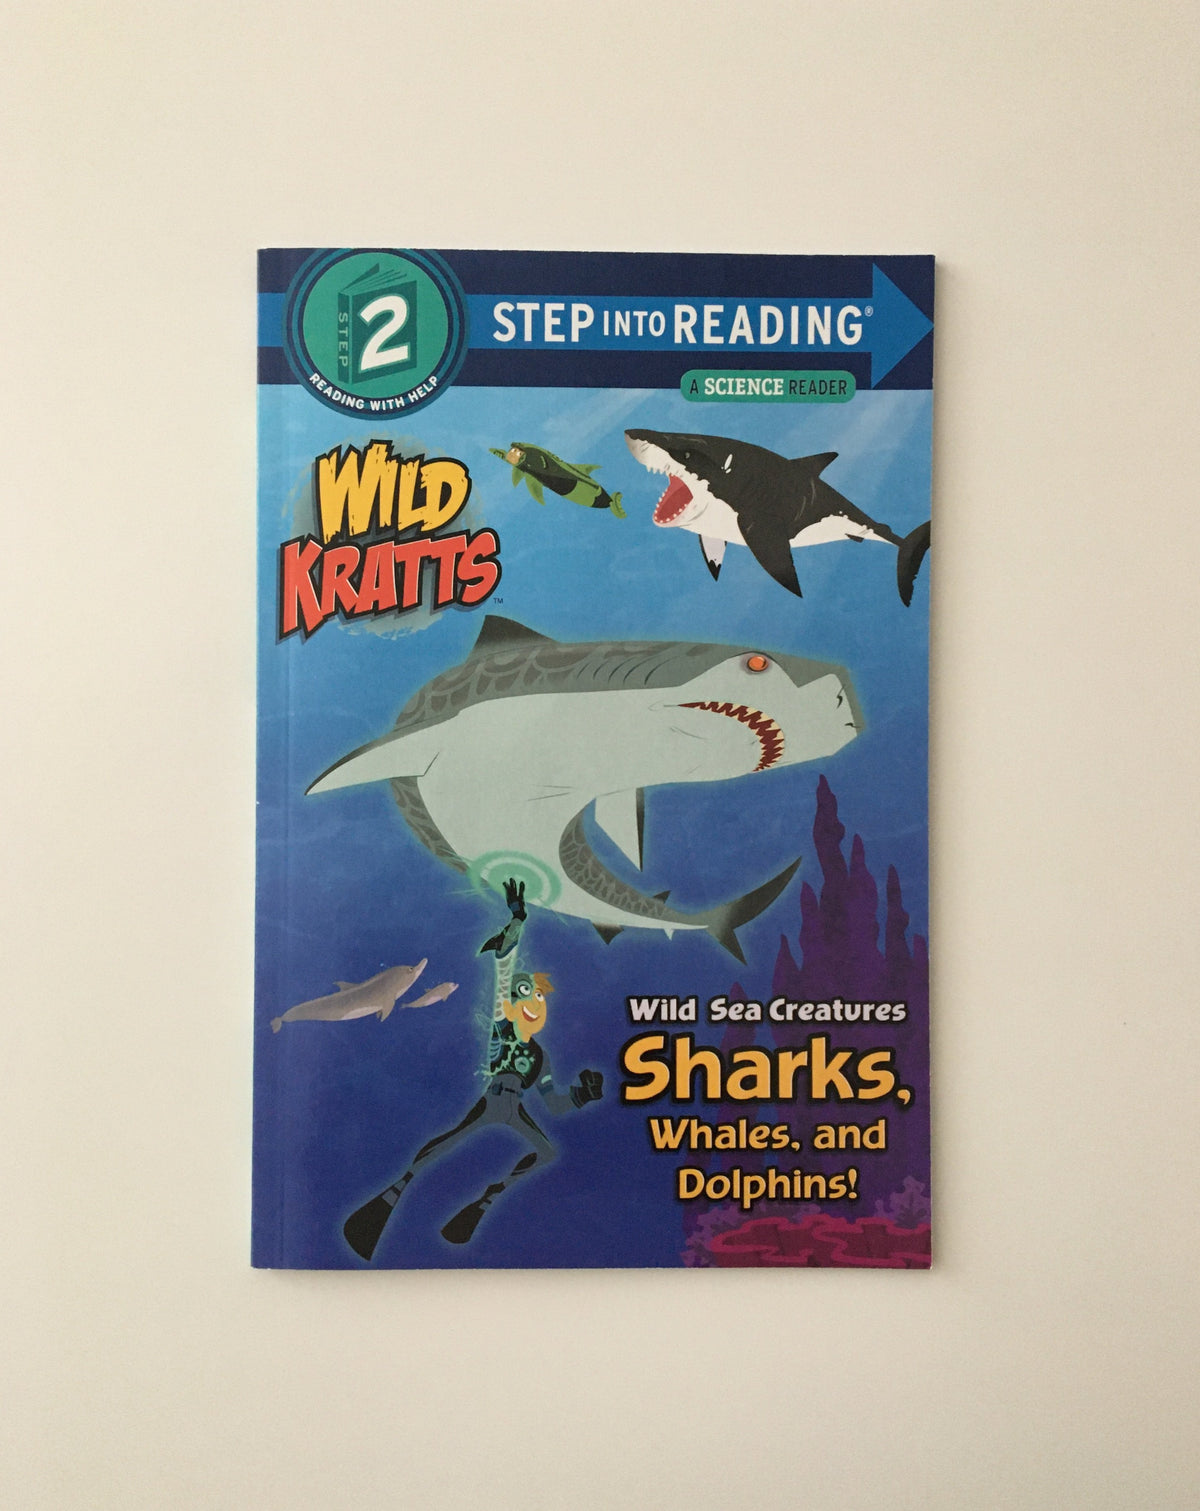 Wild Kratts: Wild Sea Creatures by the Kratt Brothers, book, Ten Dollar Books, Ten Dollar Books